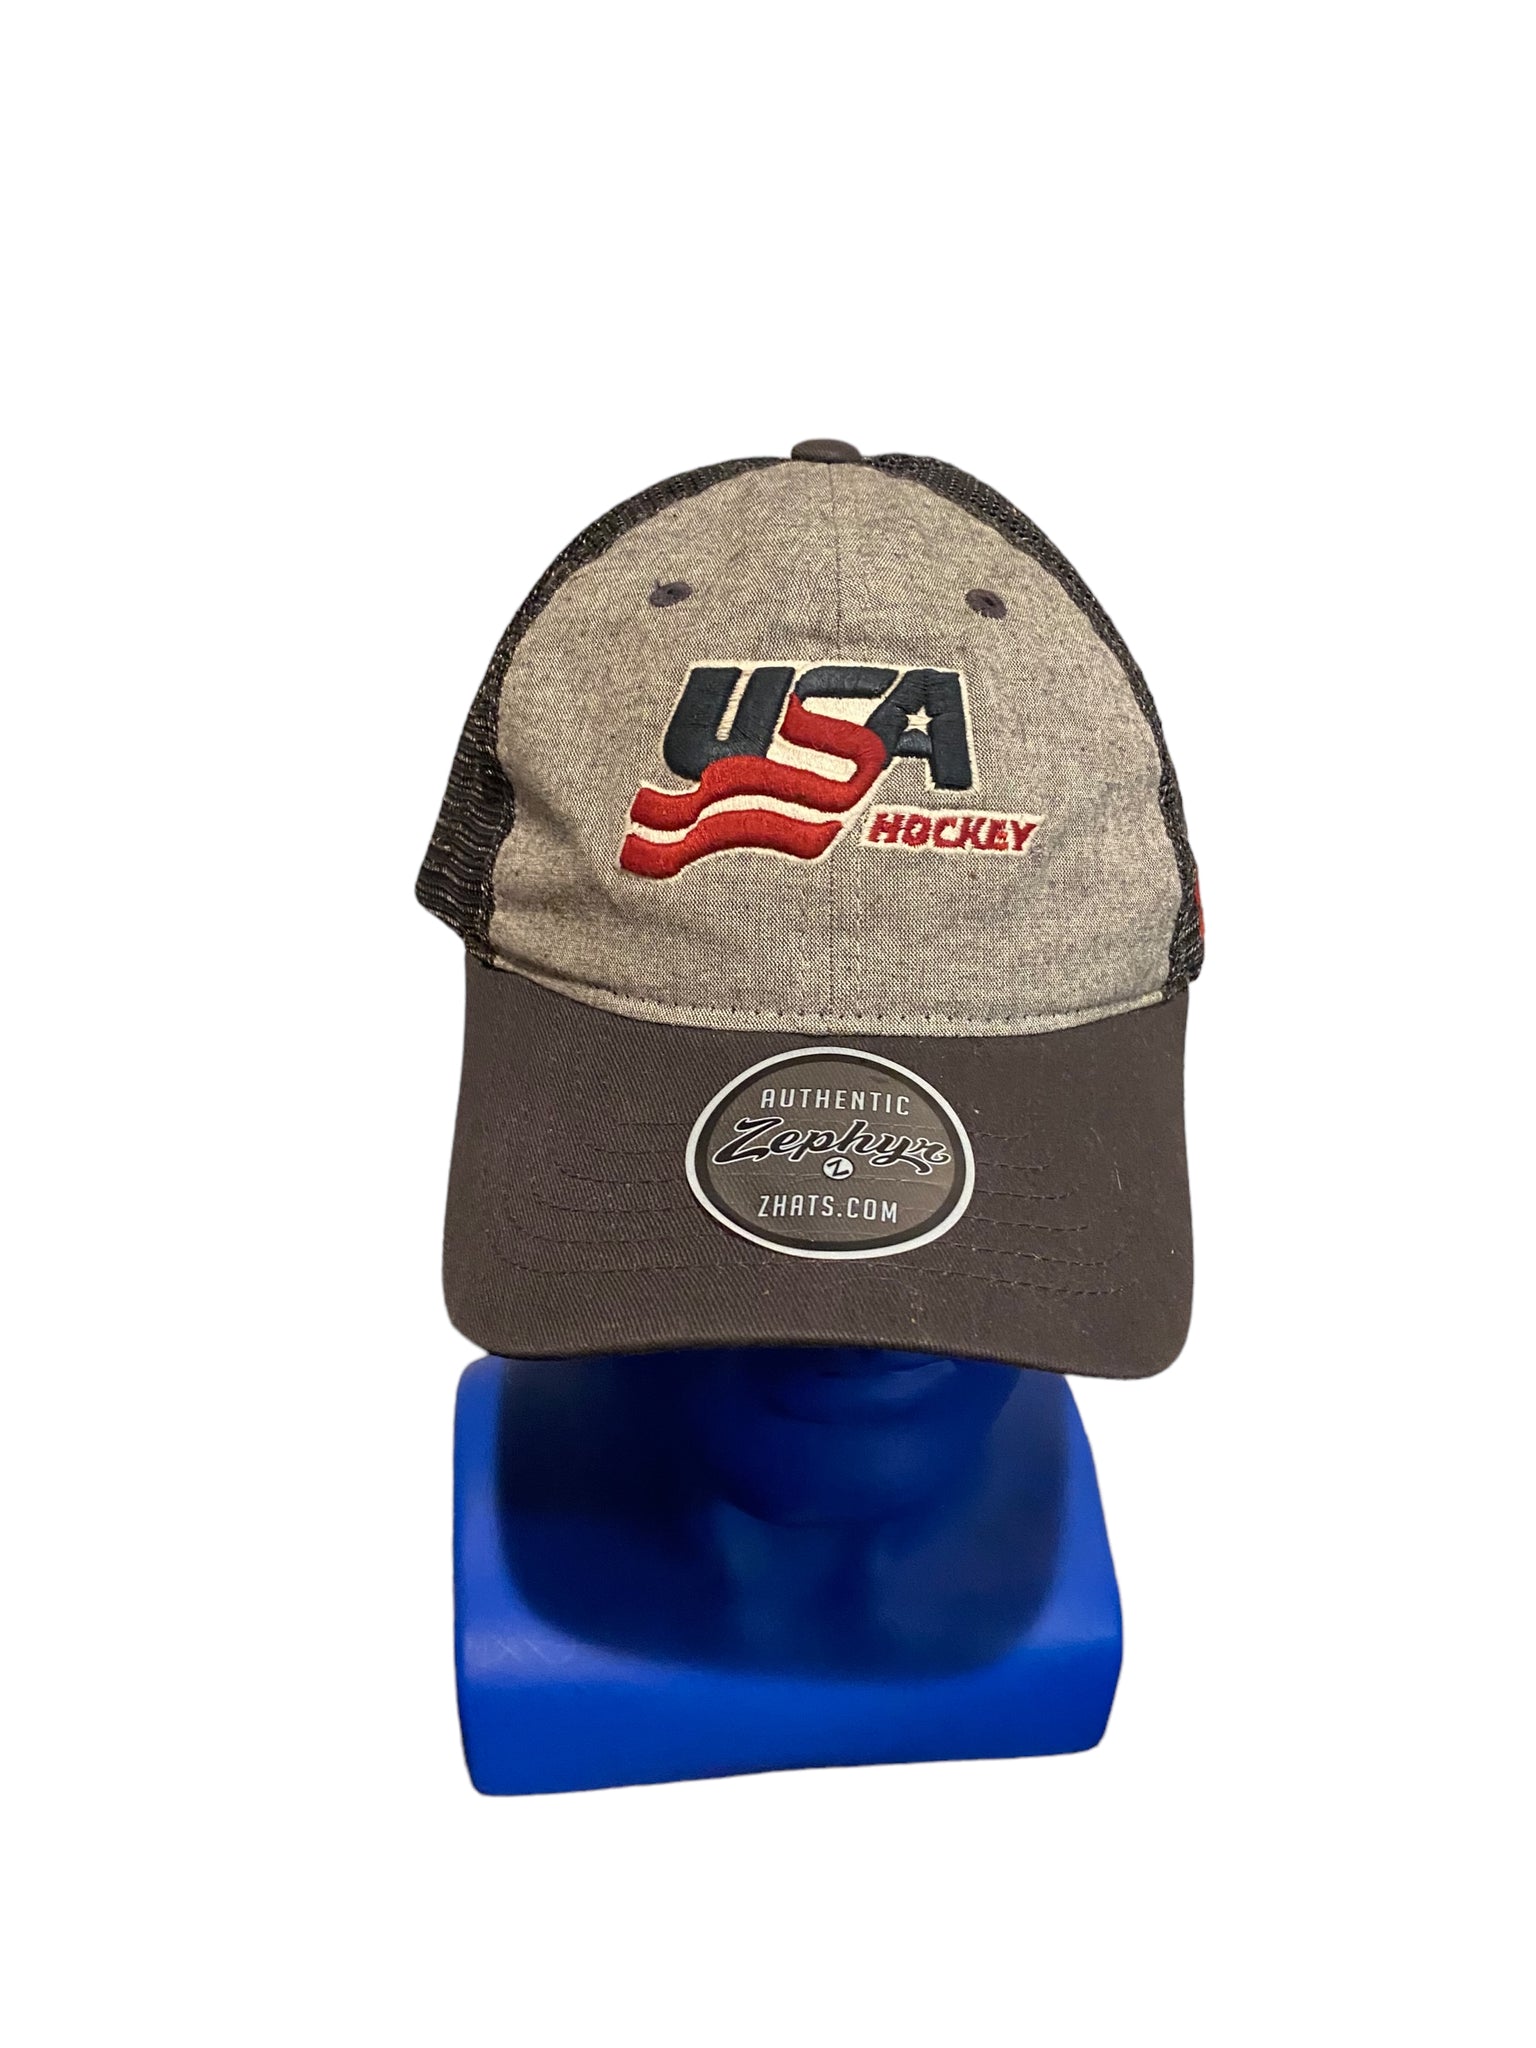 USA Hockey Strapback Adjustable Hat - Zephyr  Trucker Baseball Cap - Embroidered